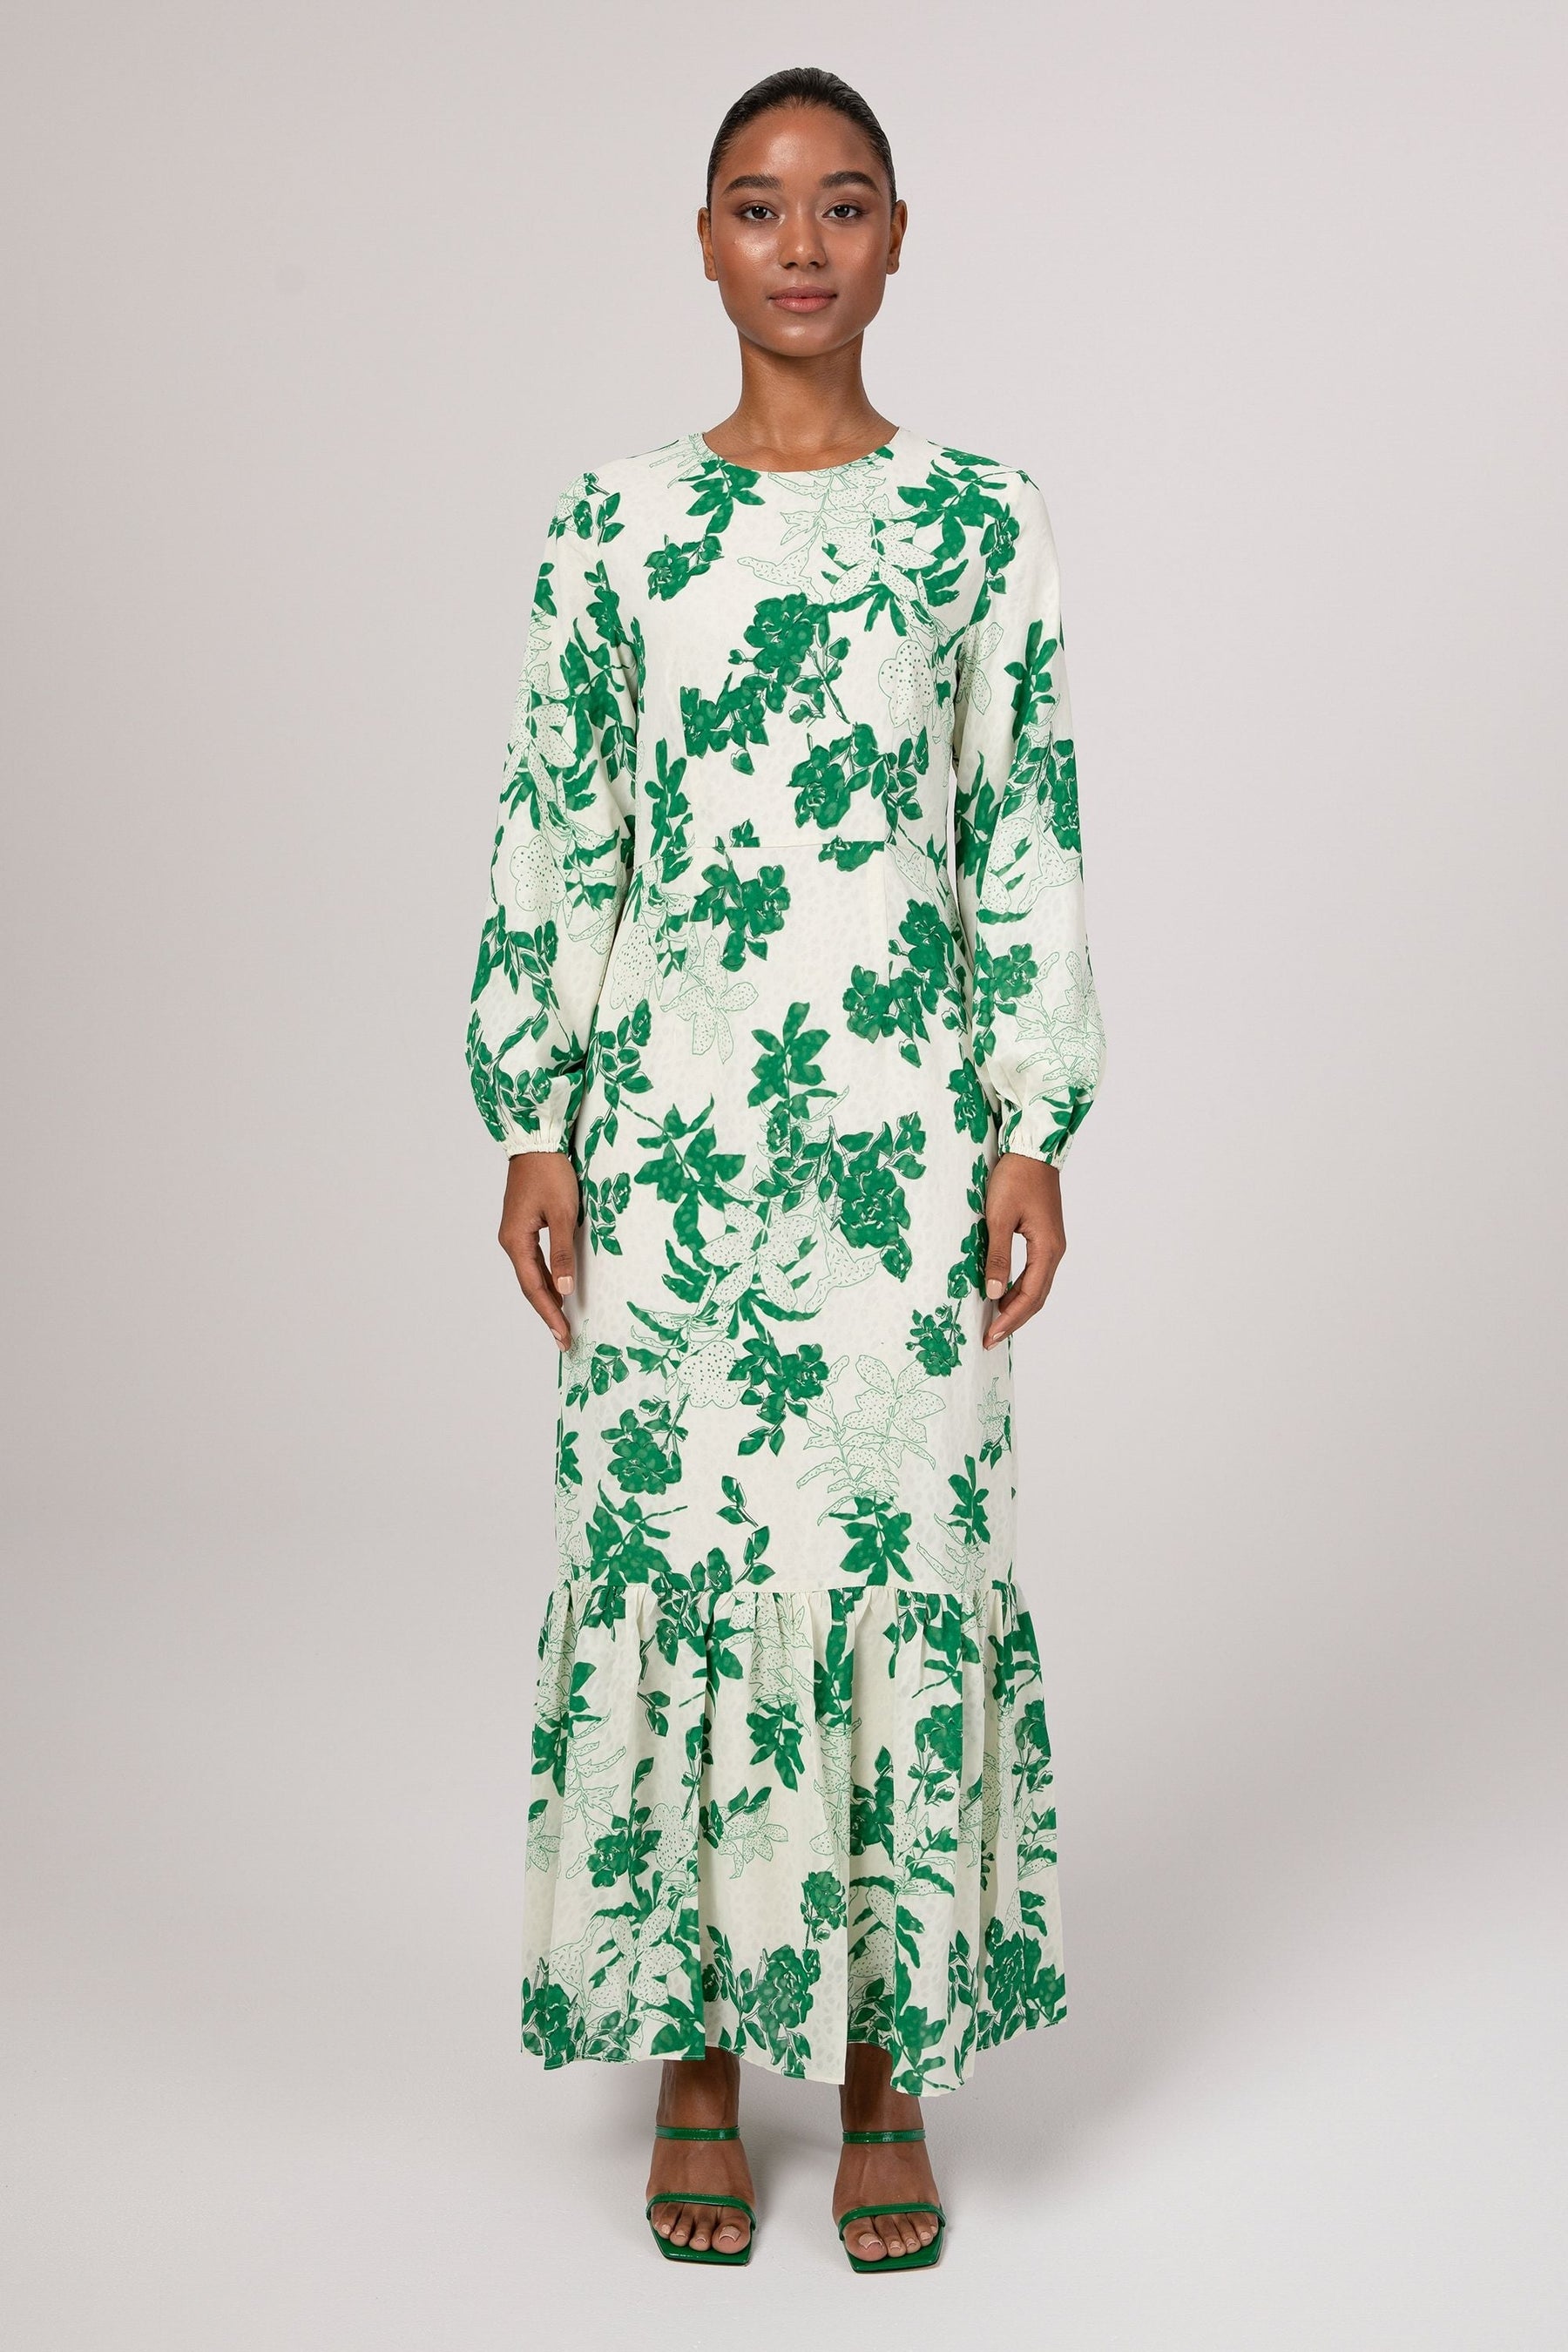 Dalia Green Floral Tiered Maxi Dress Veiled 